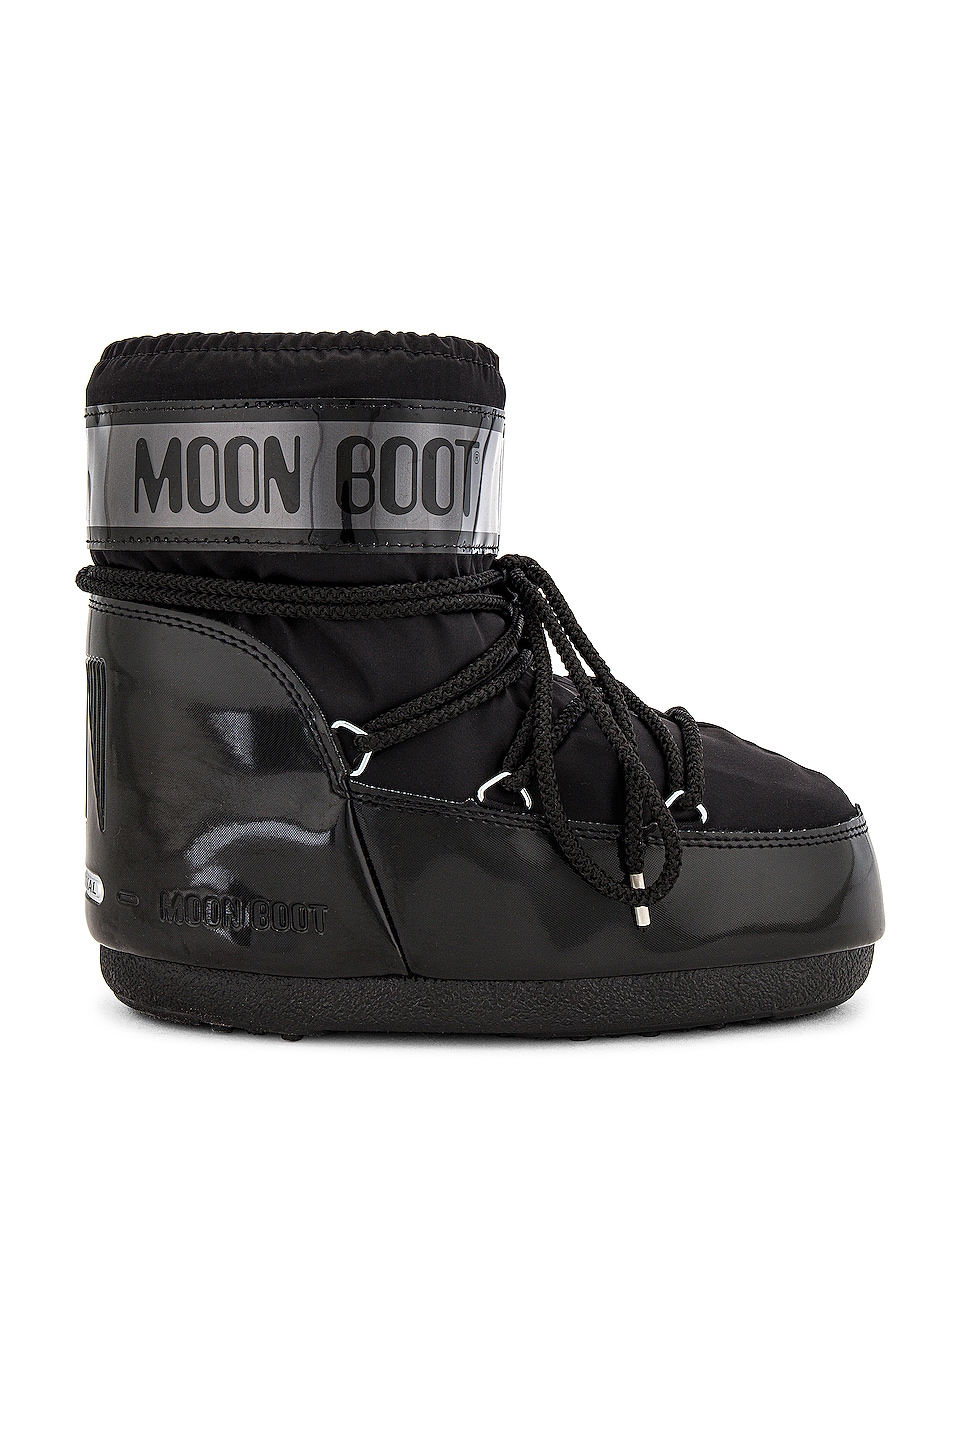 Moon boots undergo fashion revamp